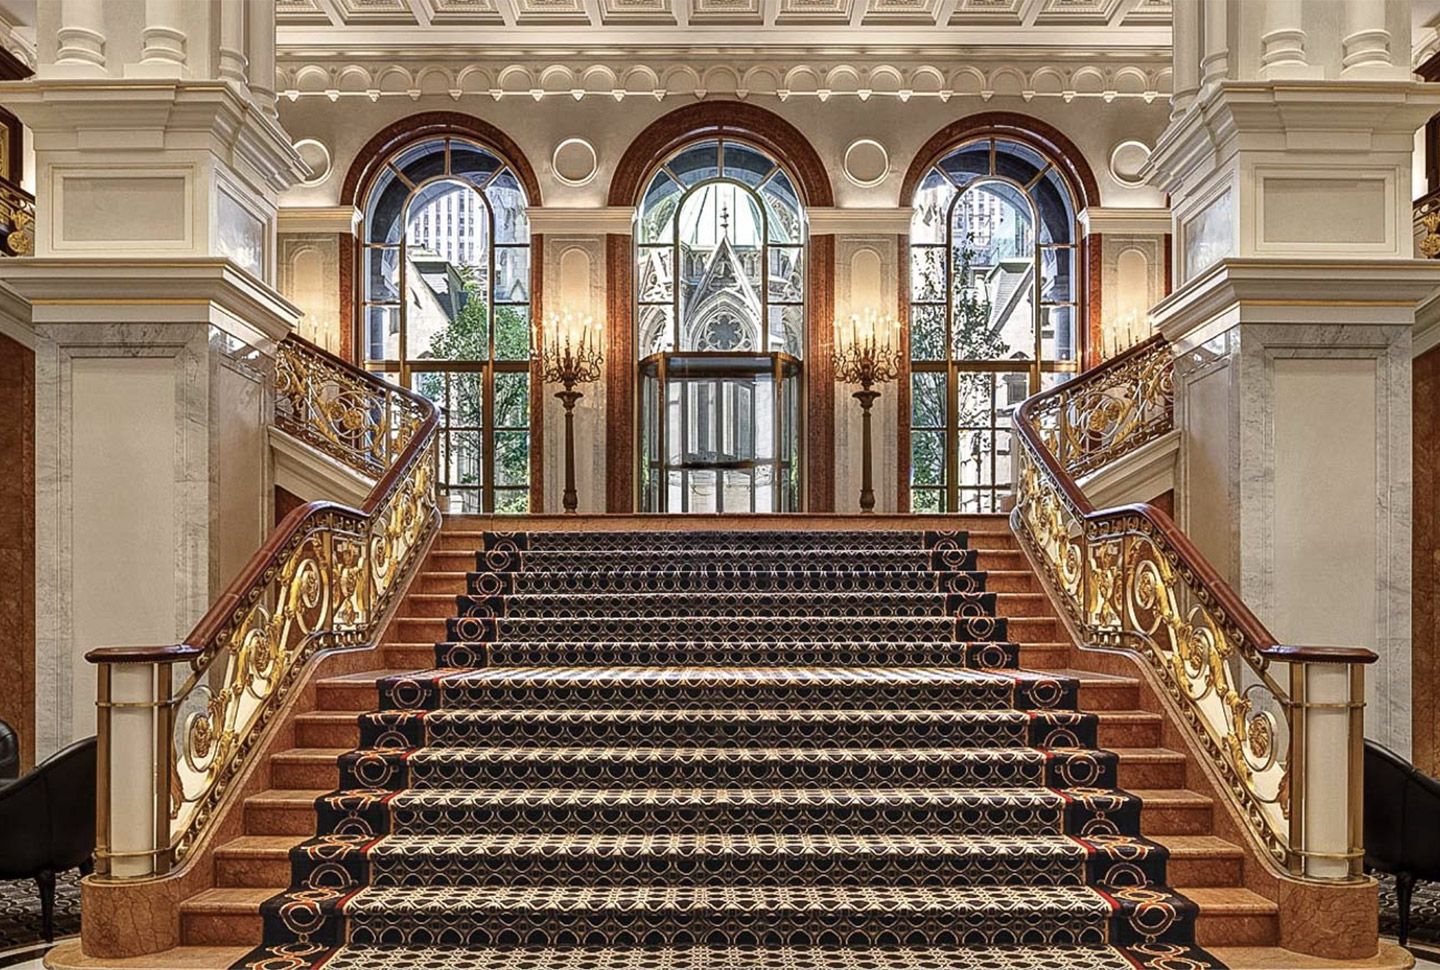 Lotte-New-York-Palace-Stairwell.jpg